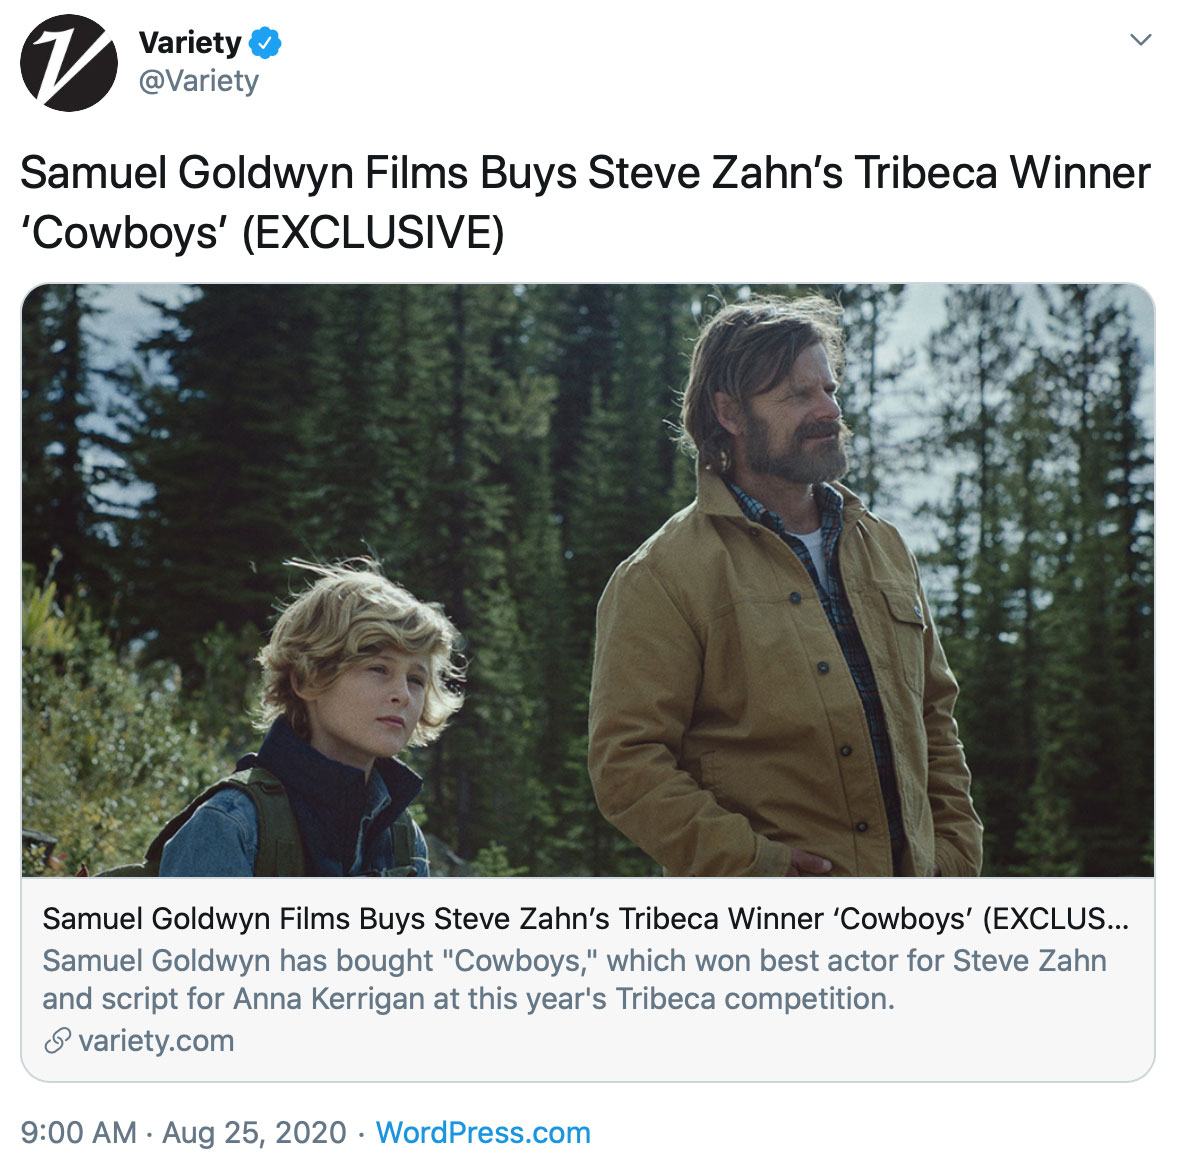 Samuel Goldwyn Films Buys Steve Zahn’s Tribeca Winner ‘Cowboys’ (EXCLUSIVE)